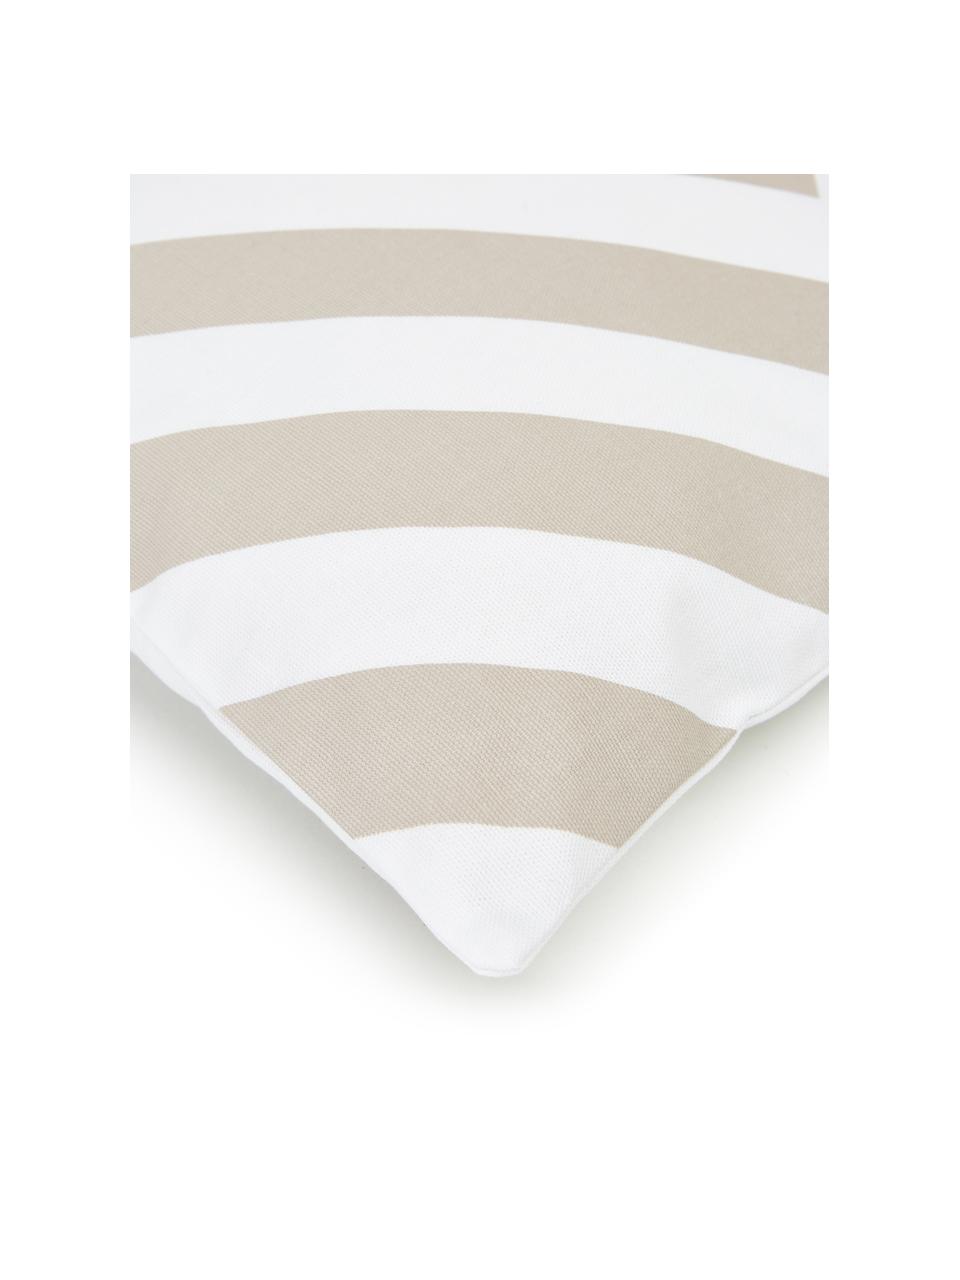 Kussenhoes Sera in beige/wit met grafisch patroon, 100% katoen, Wit, beige, B 45 x L 45 cm